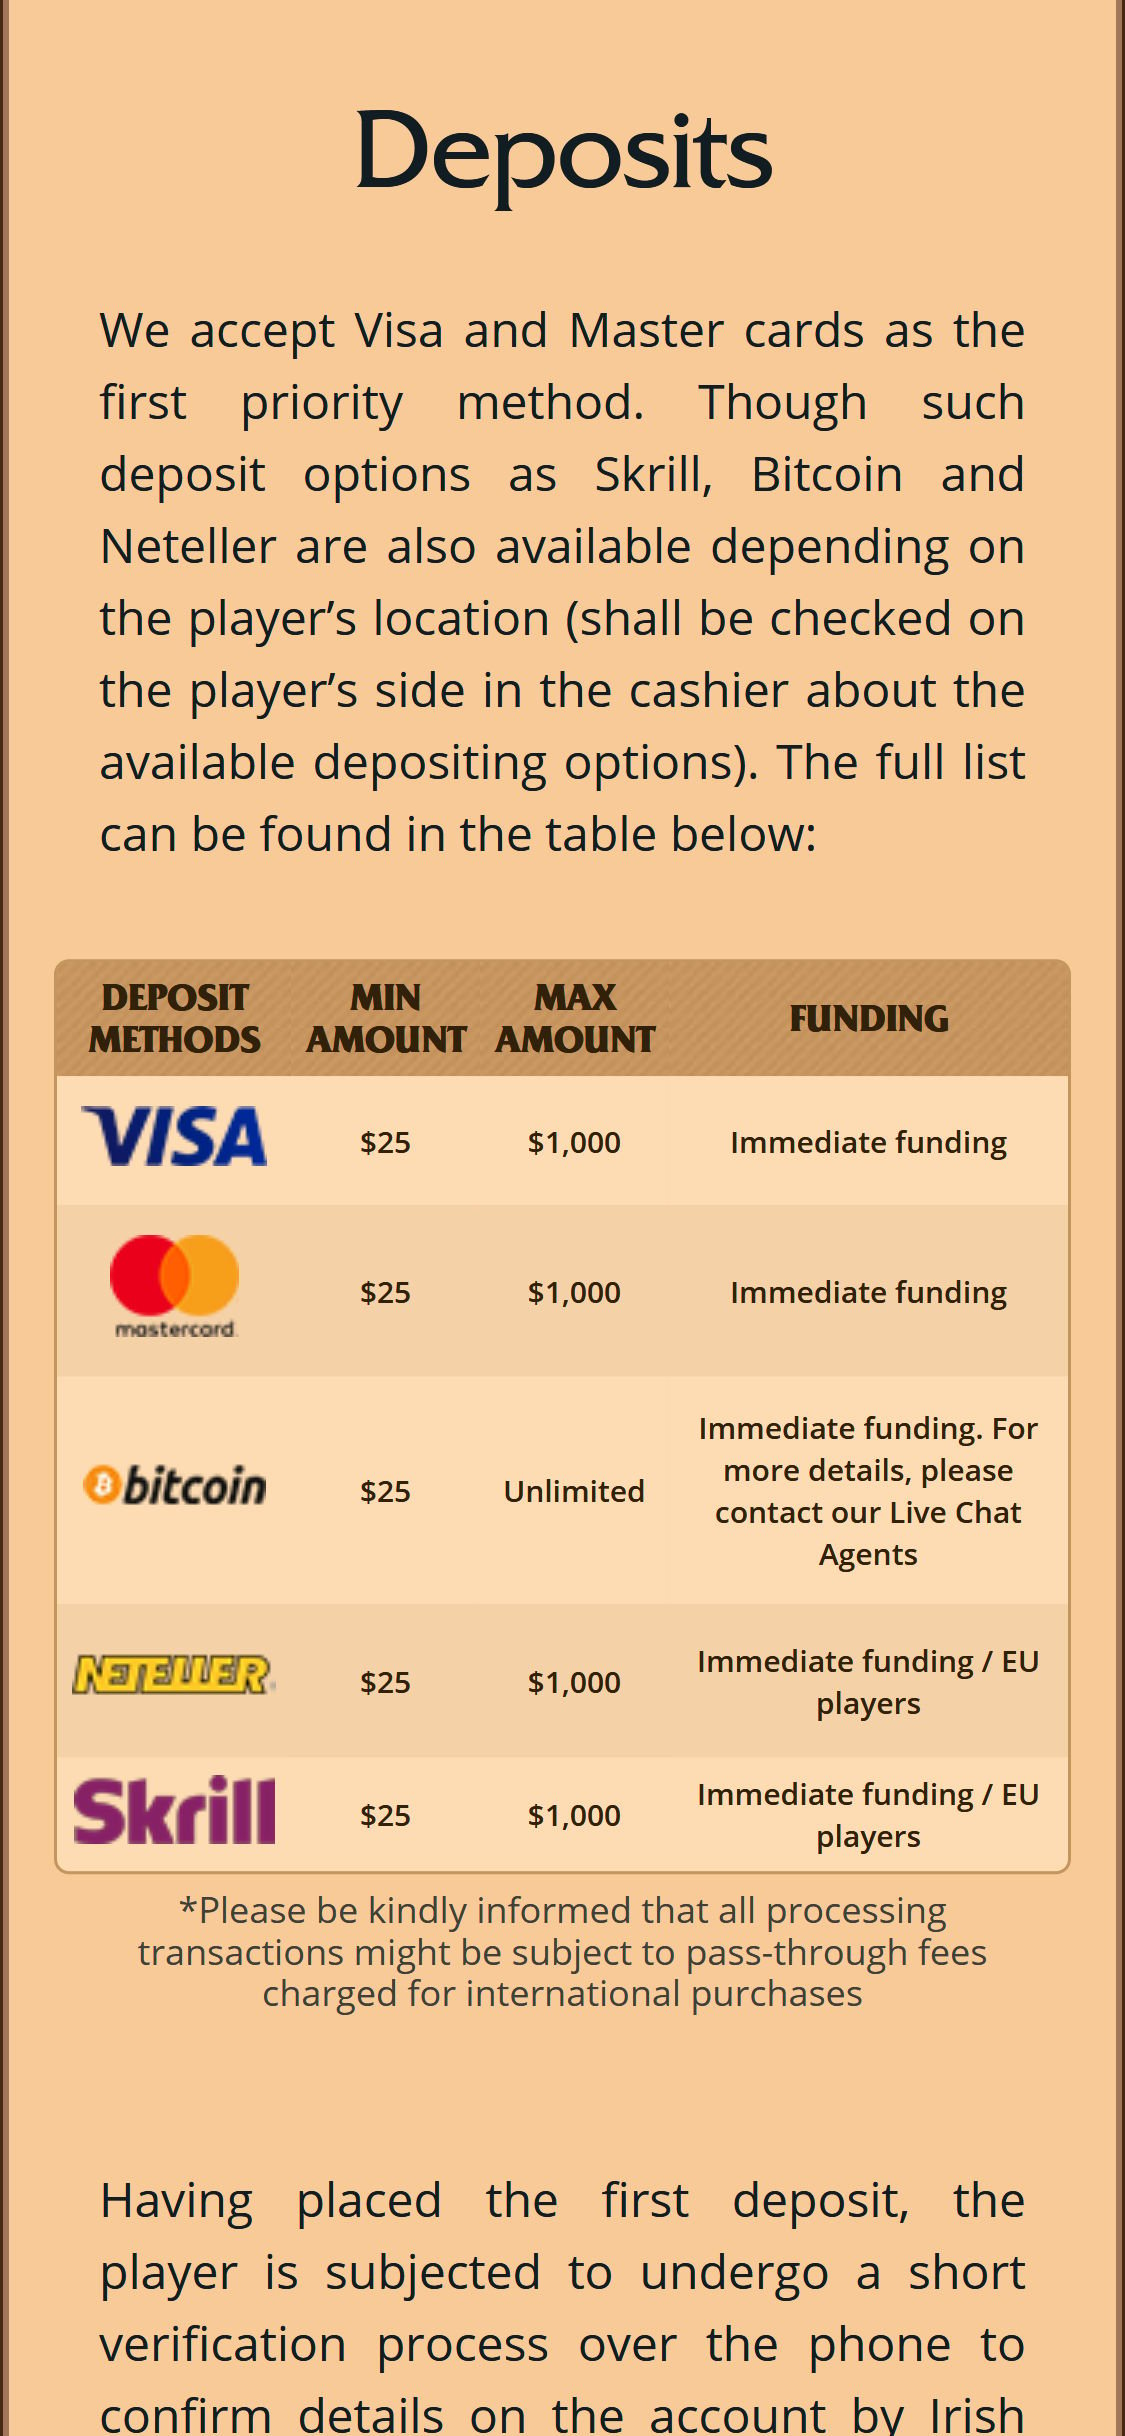 IrishLuck Casino Mobile Payment Methods Review